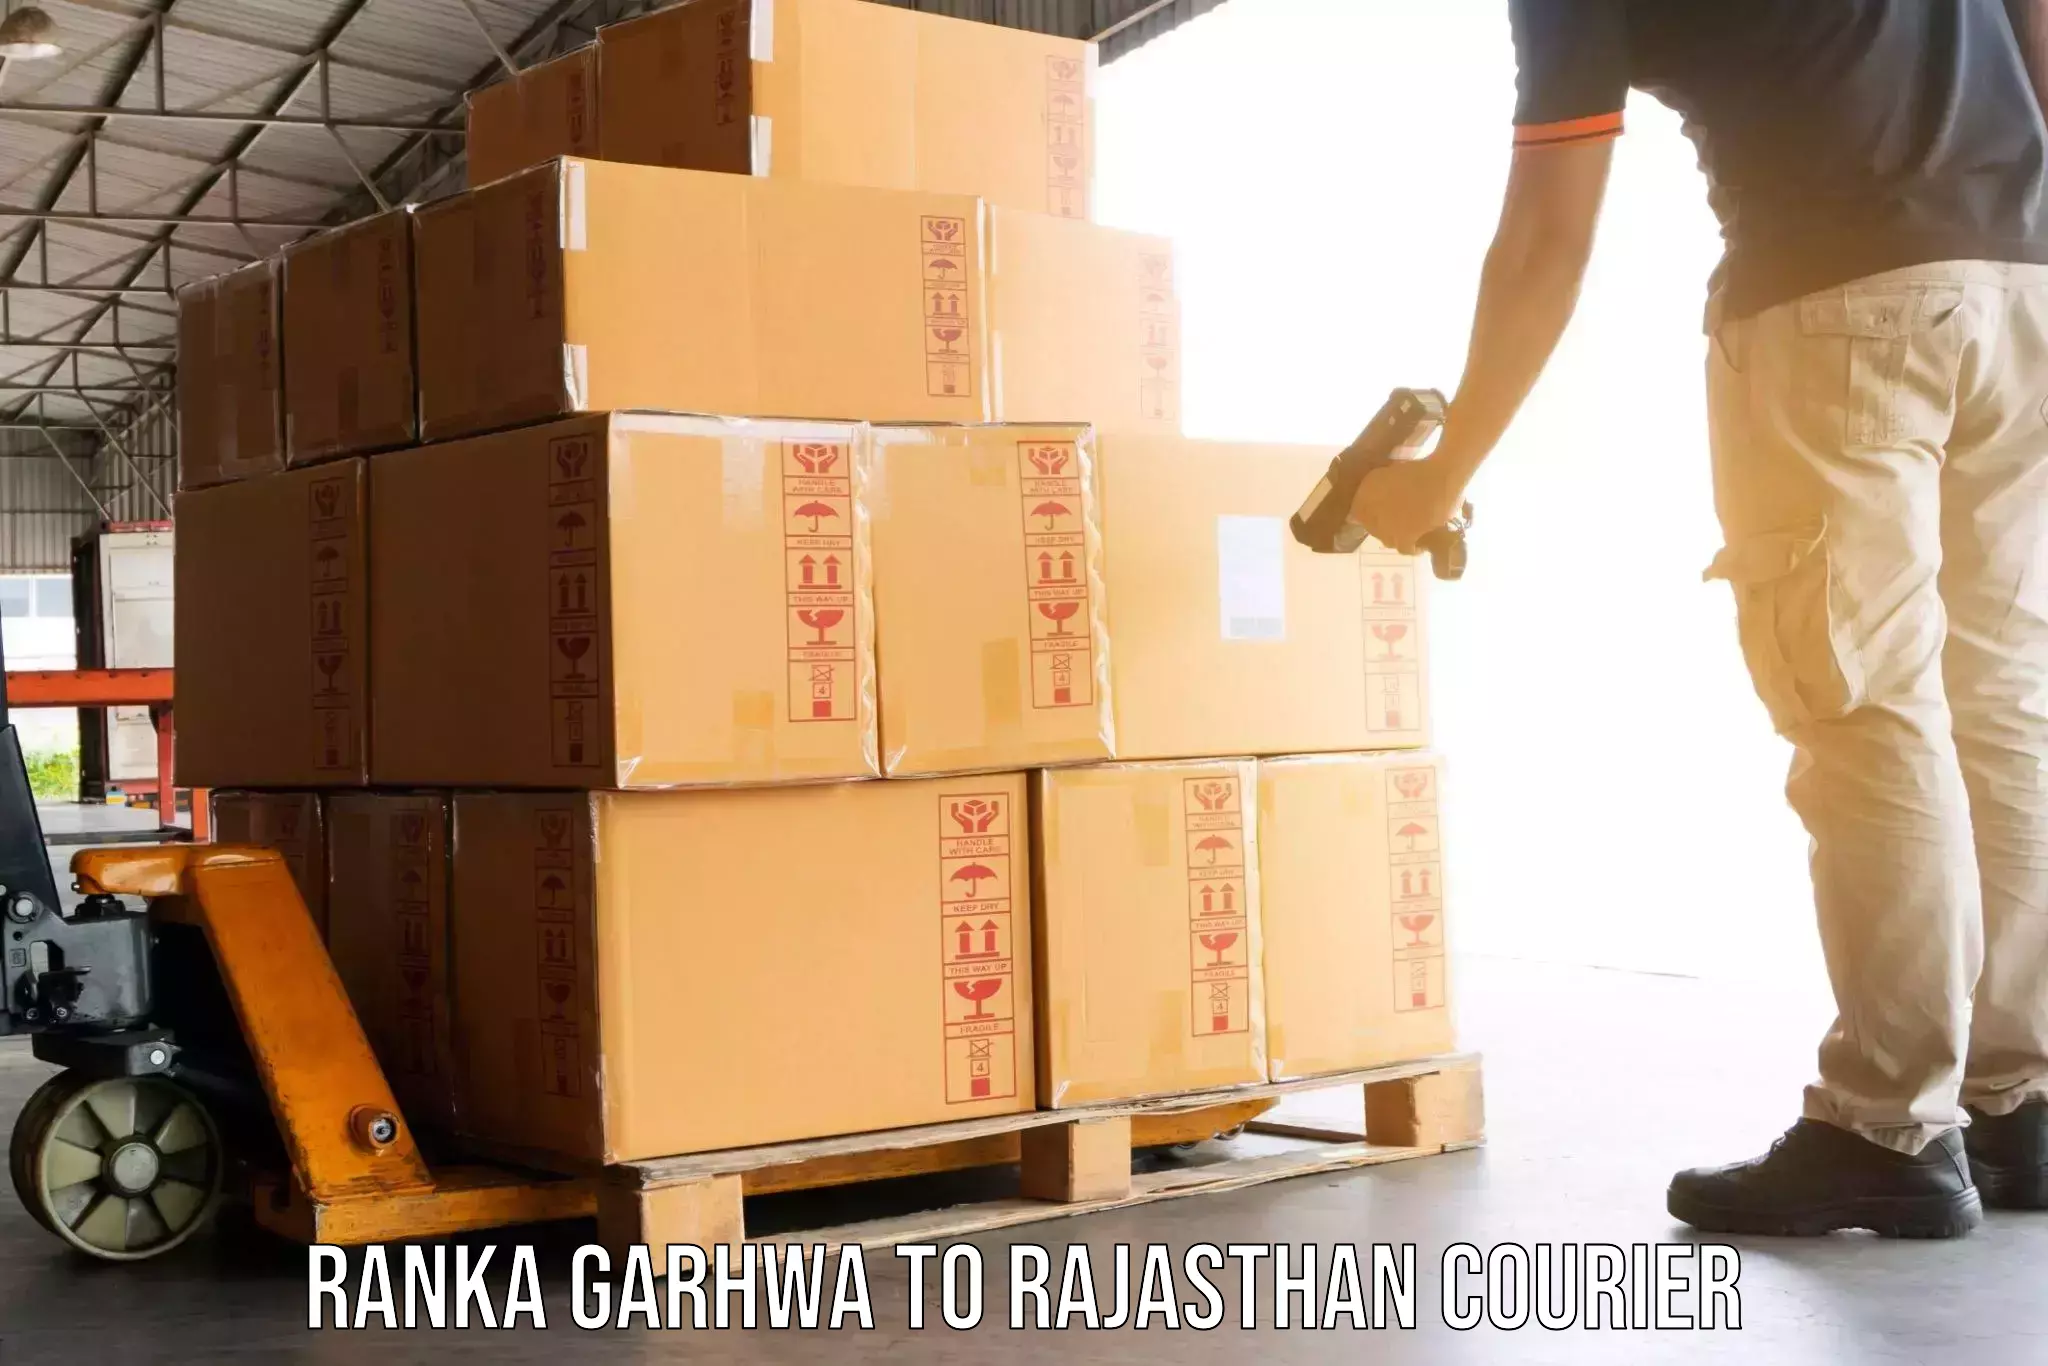 Furniture relocation experts Ranka Garhwa to Bhilwara